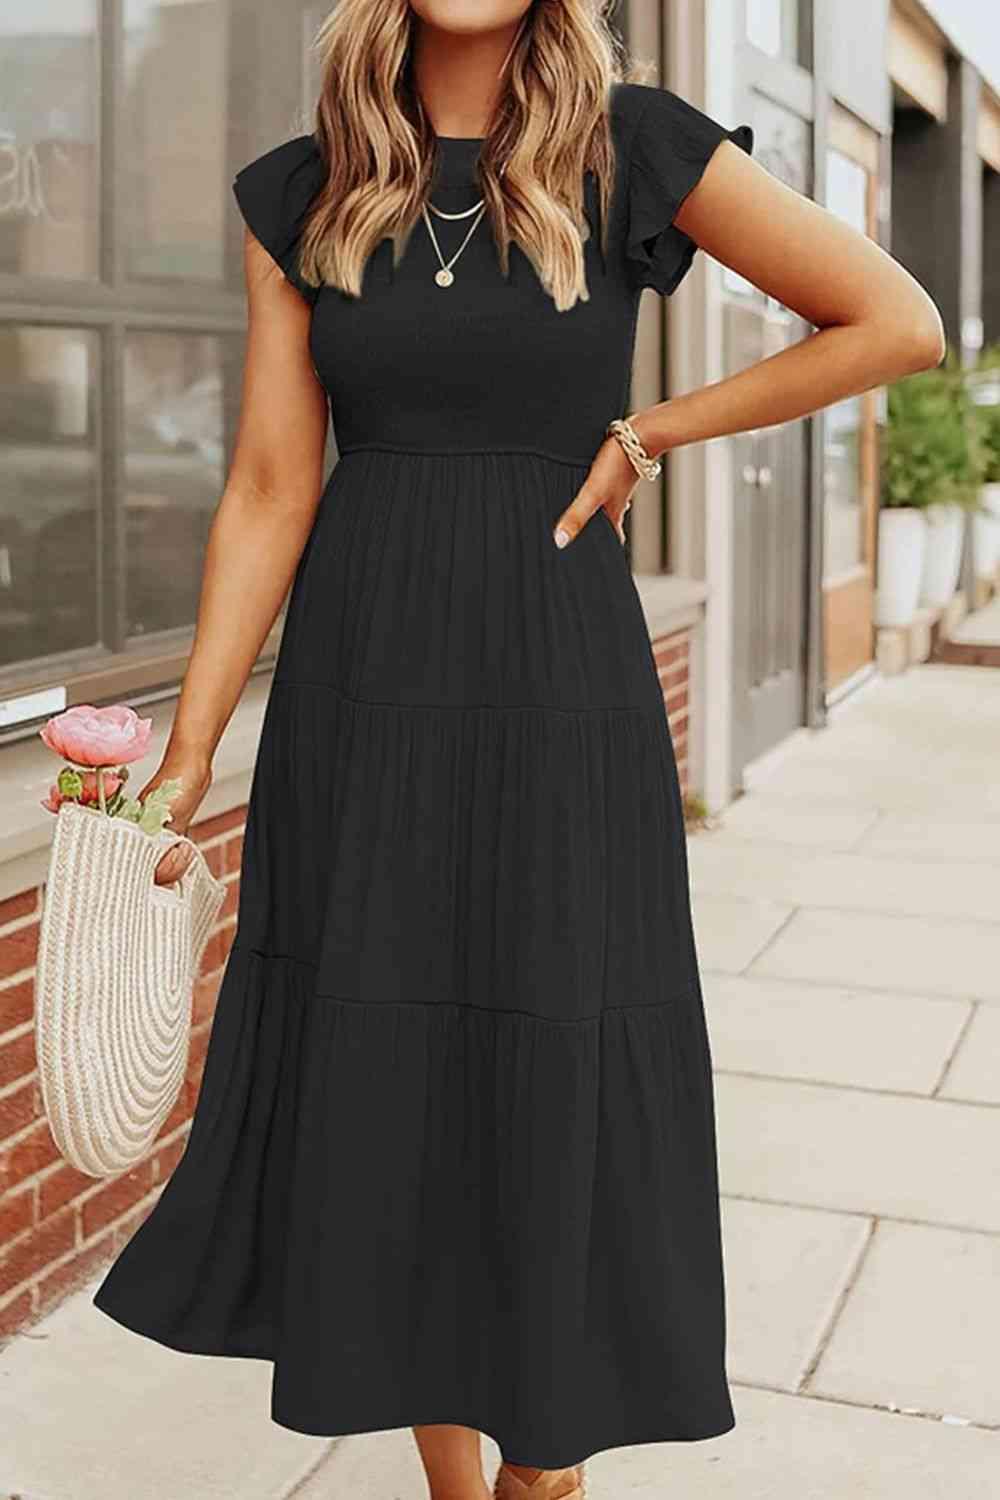 a woman in a black dress standing on a sidewalk